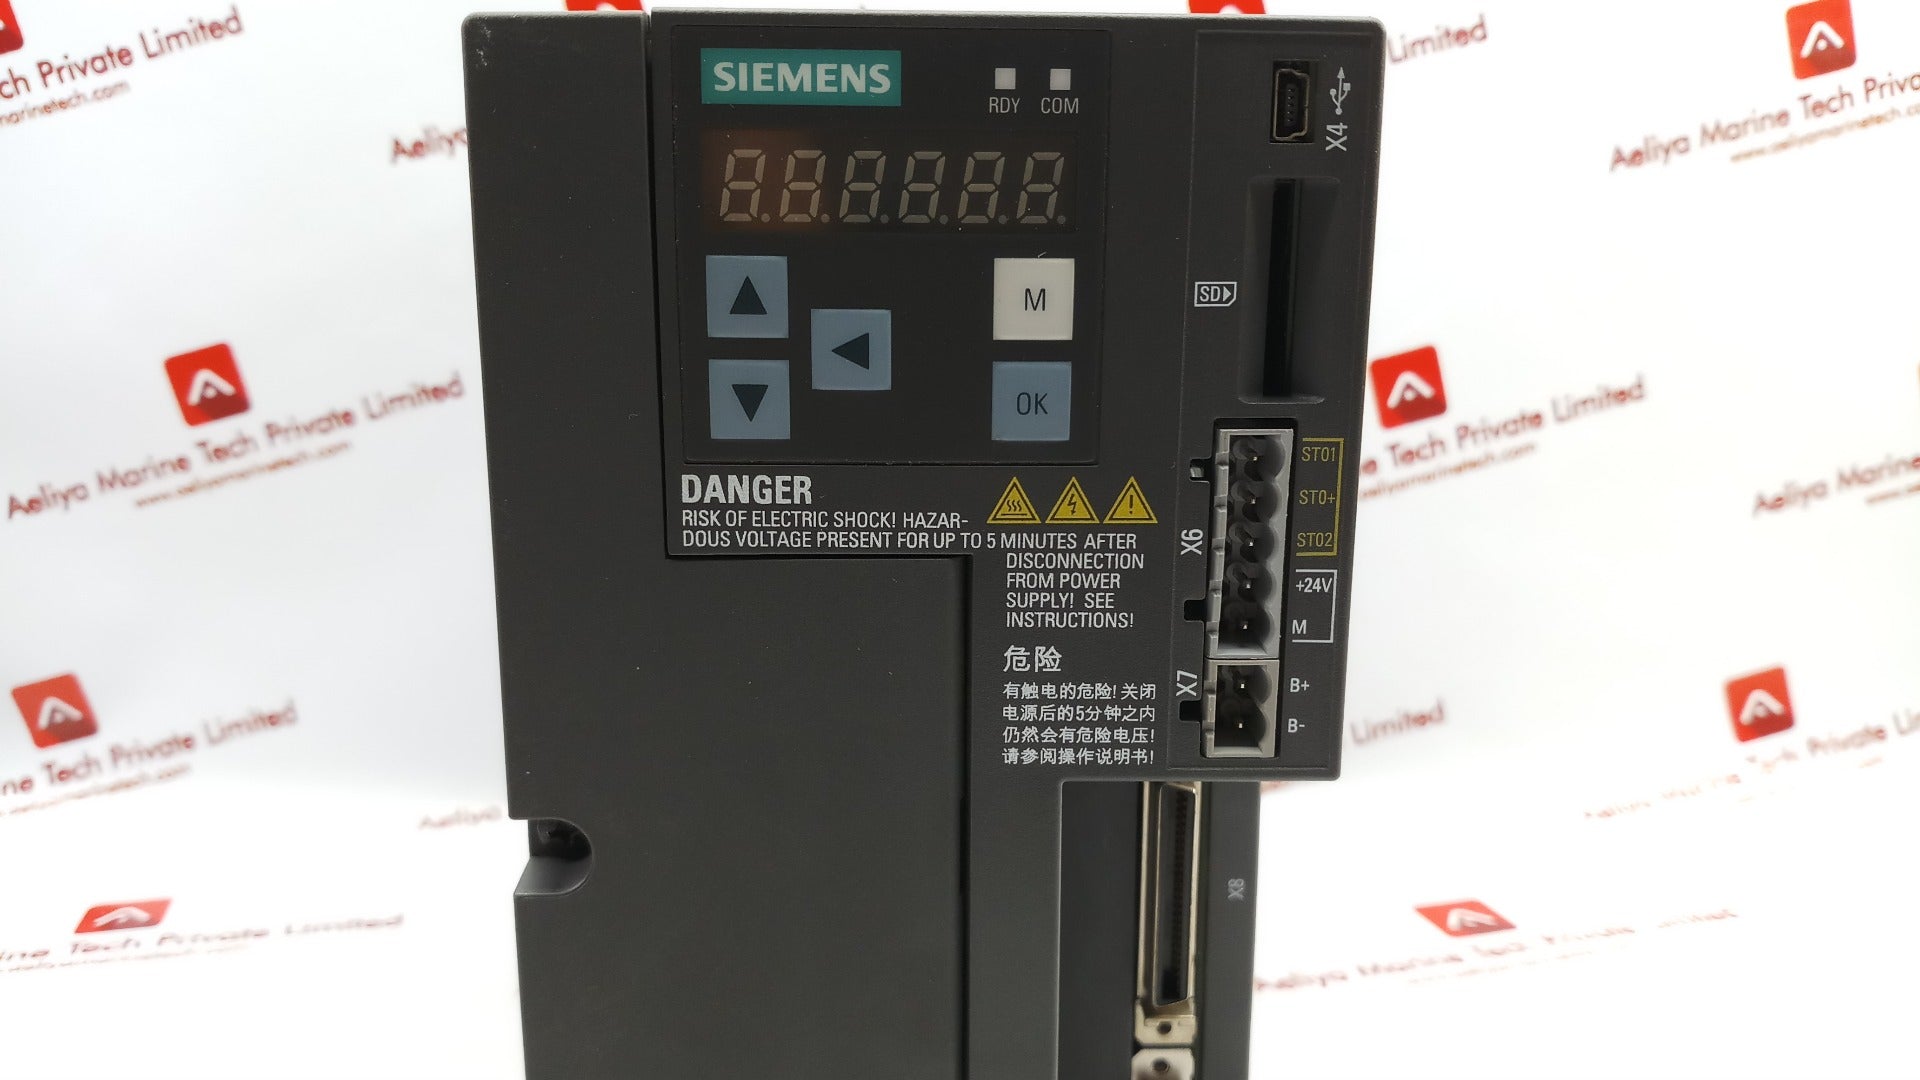 Siemens Sinamics V90 6Sl3210-5Fe11-5Ua0 Servo Drive